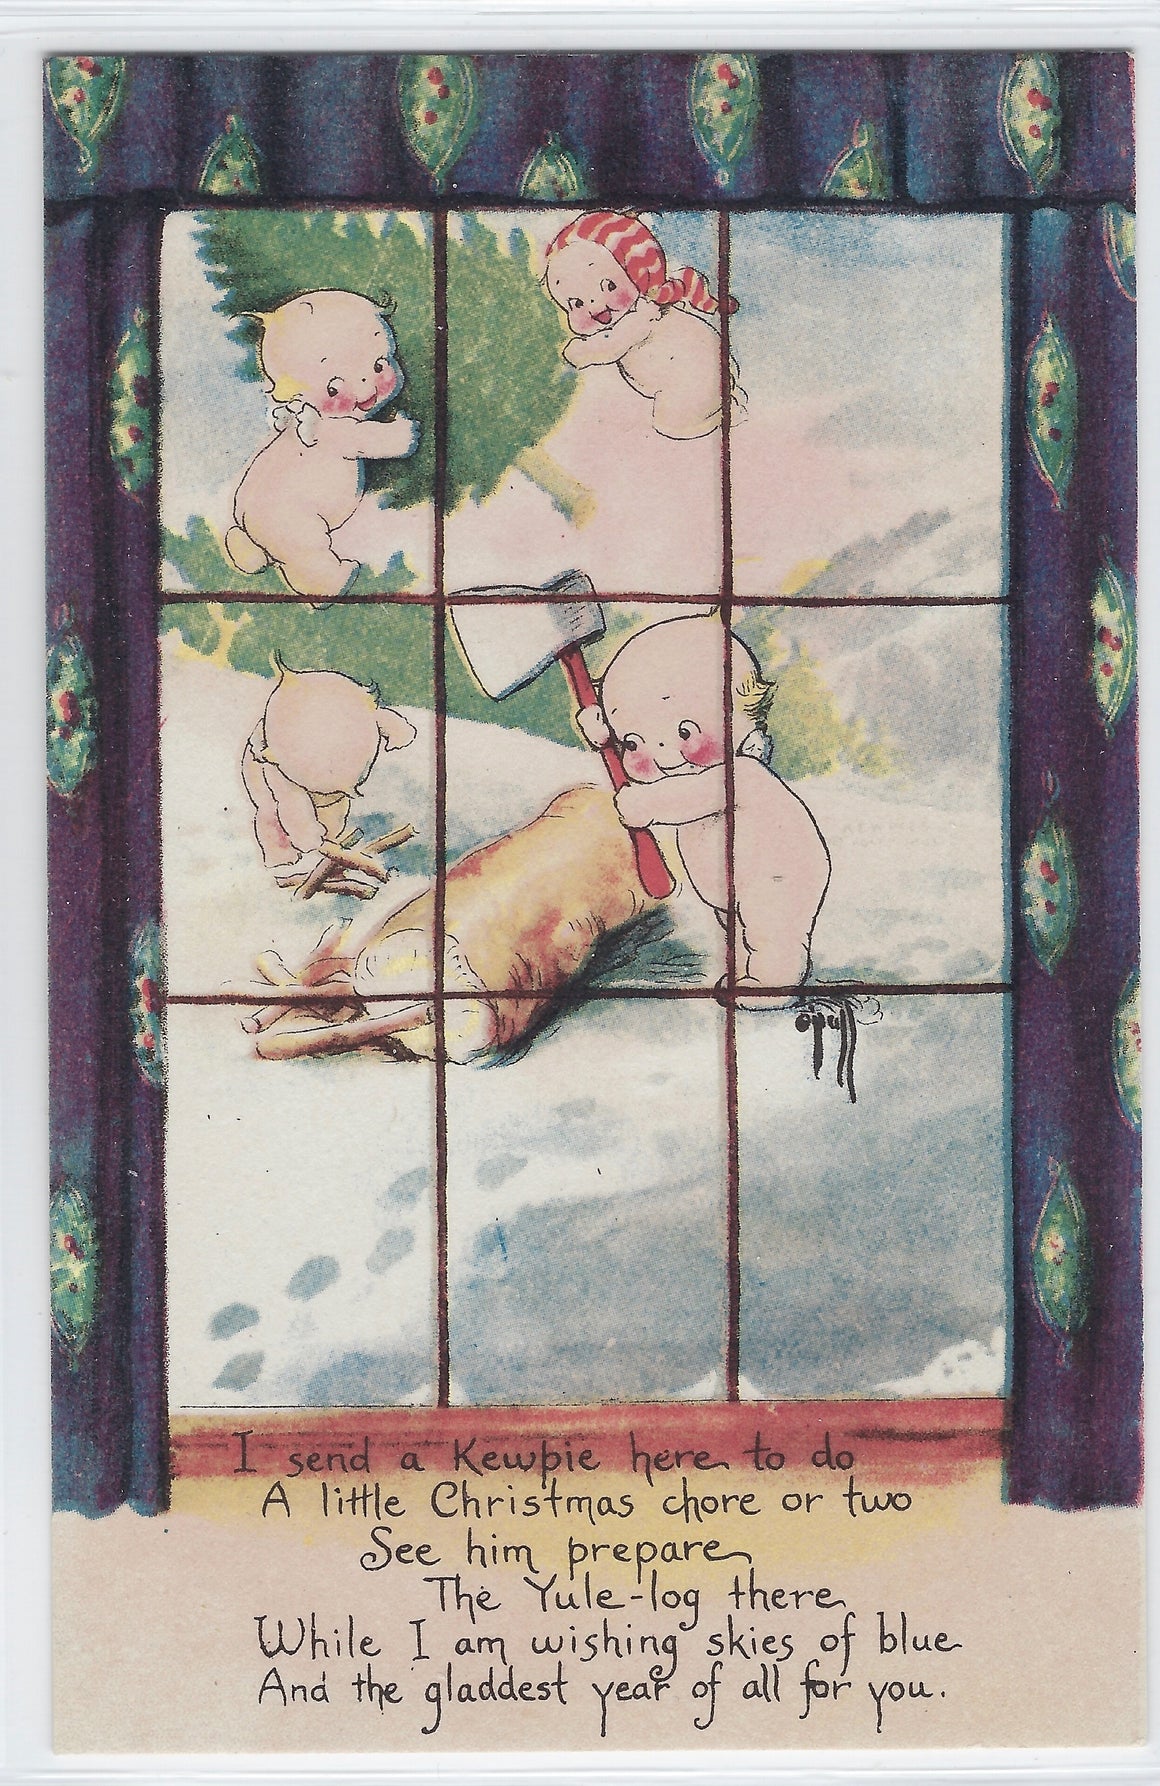 Kewpie Postcard Christmas Card Rosie O' Neil Baby Kewpies Cutting Down Tree Through Window